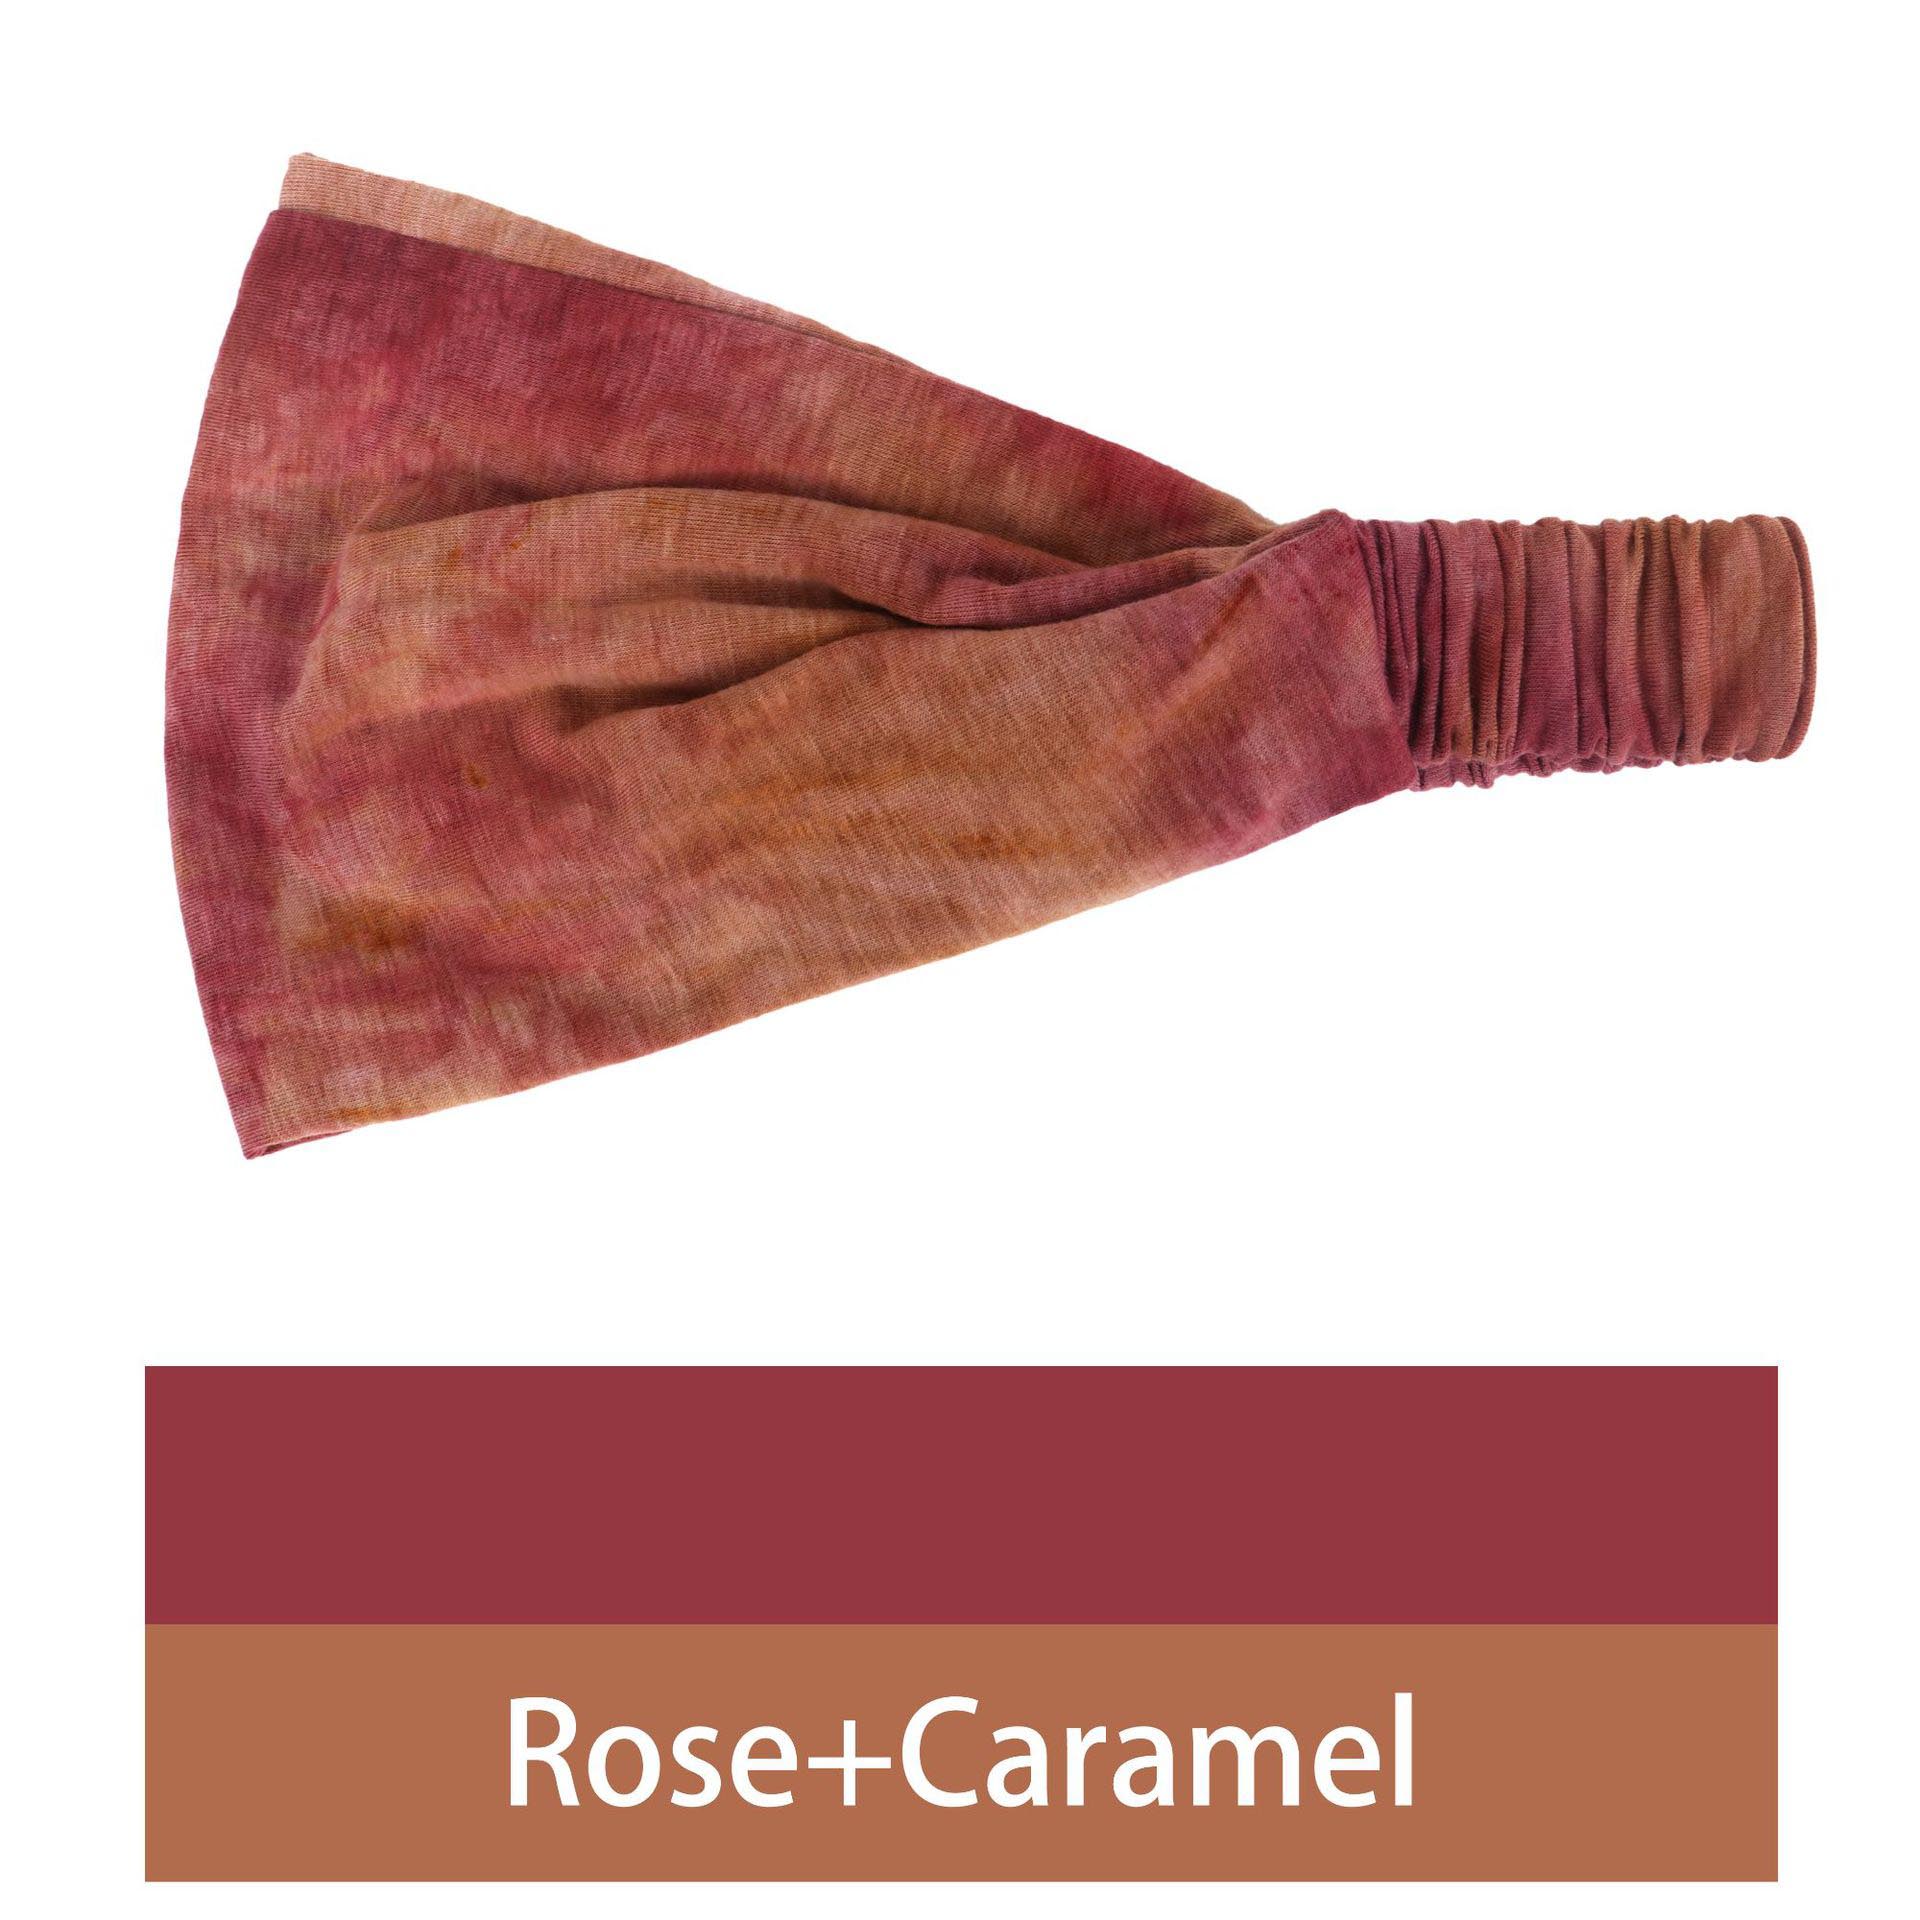 Rose and caramel